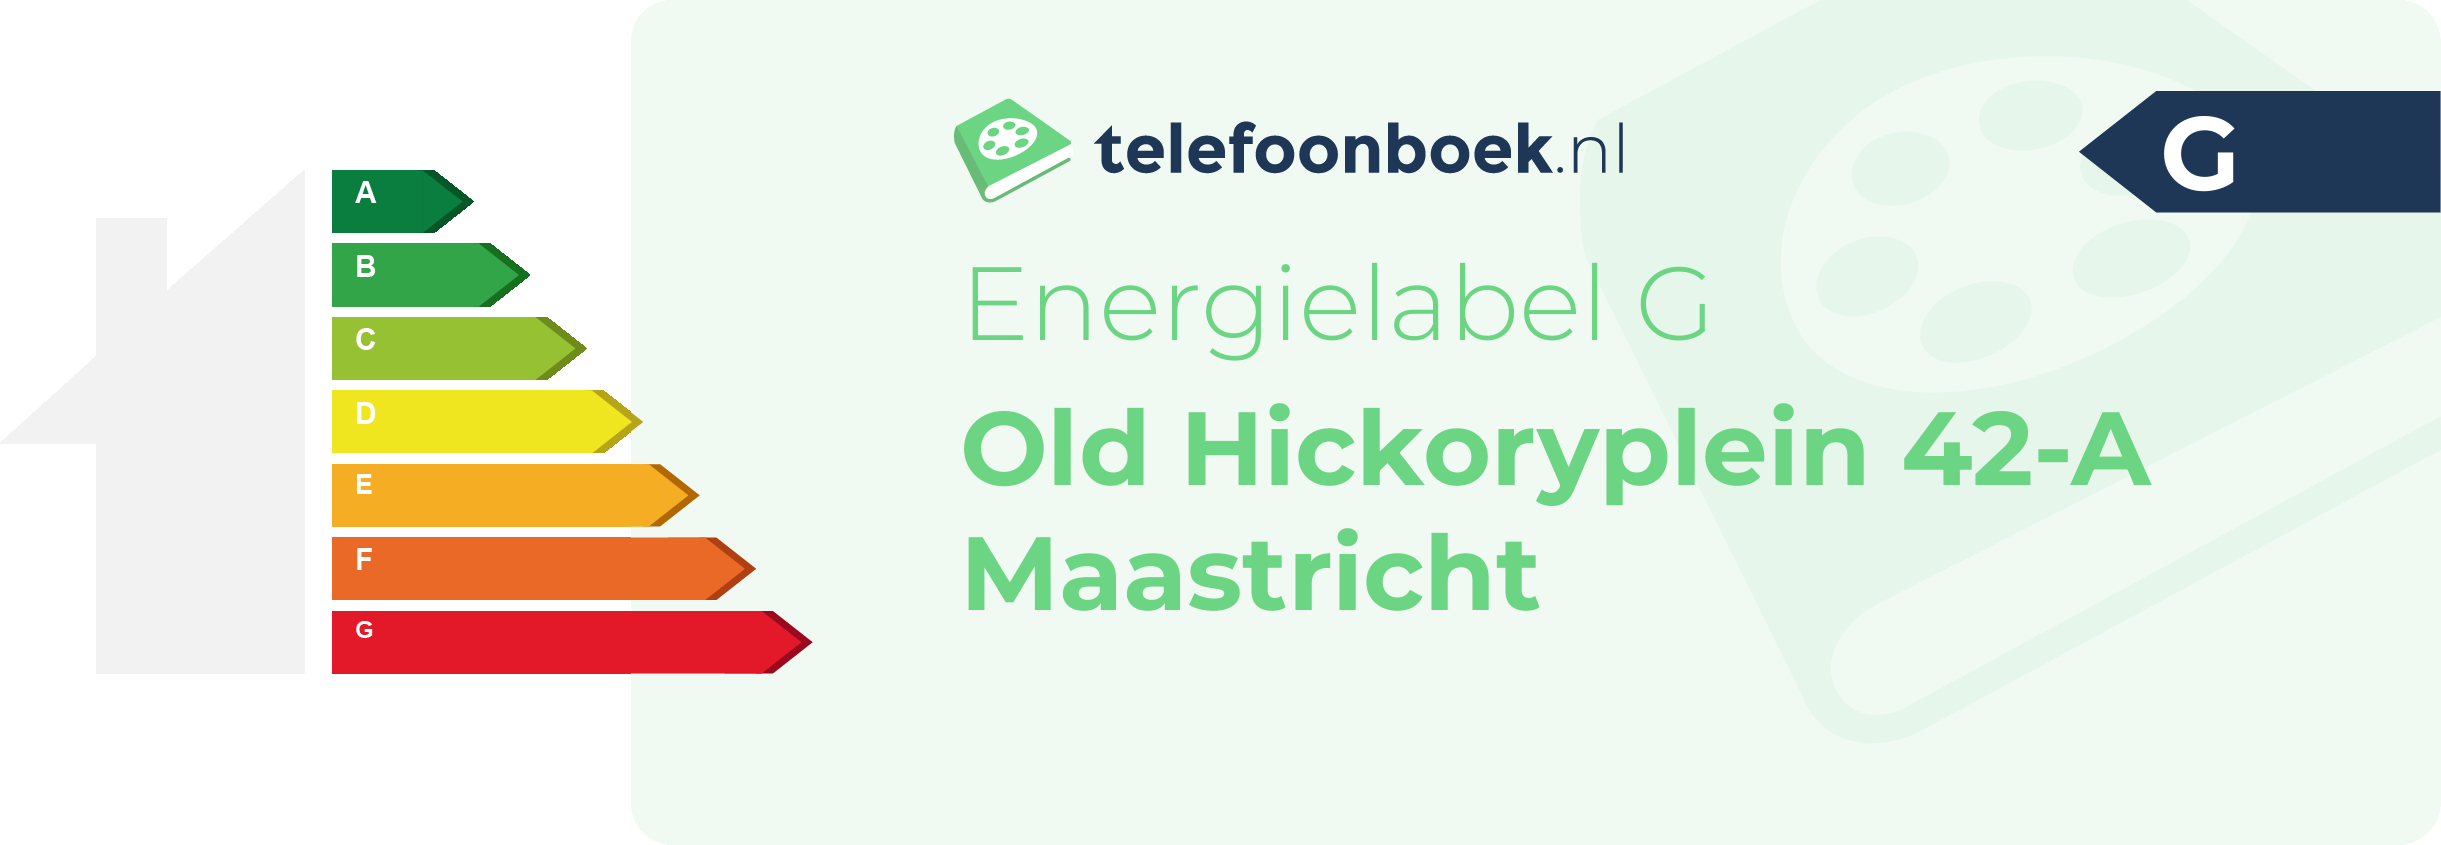 Energielabel Old Hickoryplein 42-A Maastricht